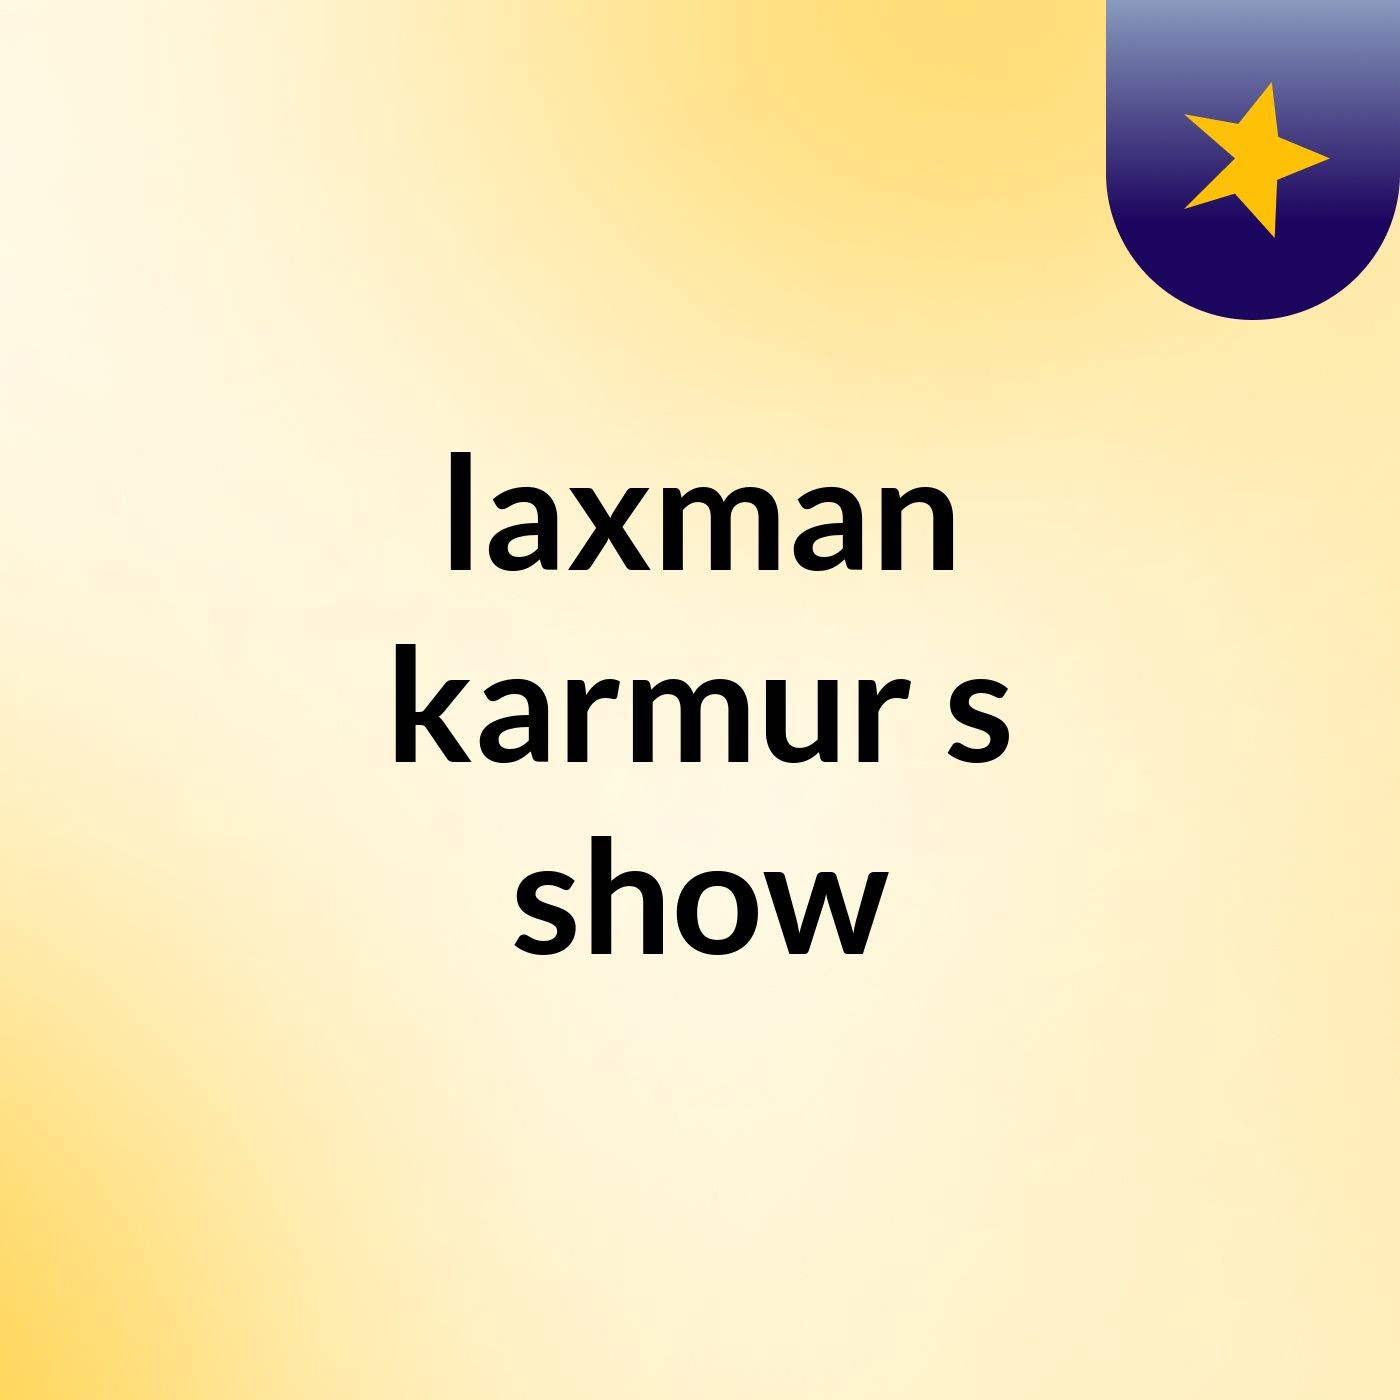 Episode 3 - laxman karmur's show